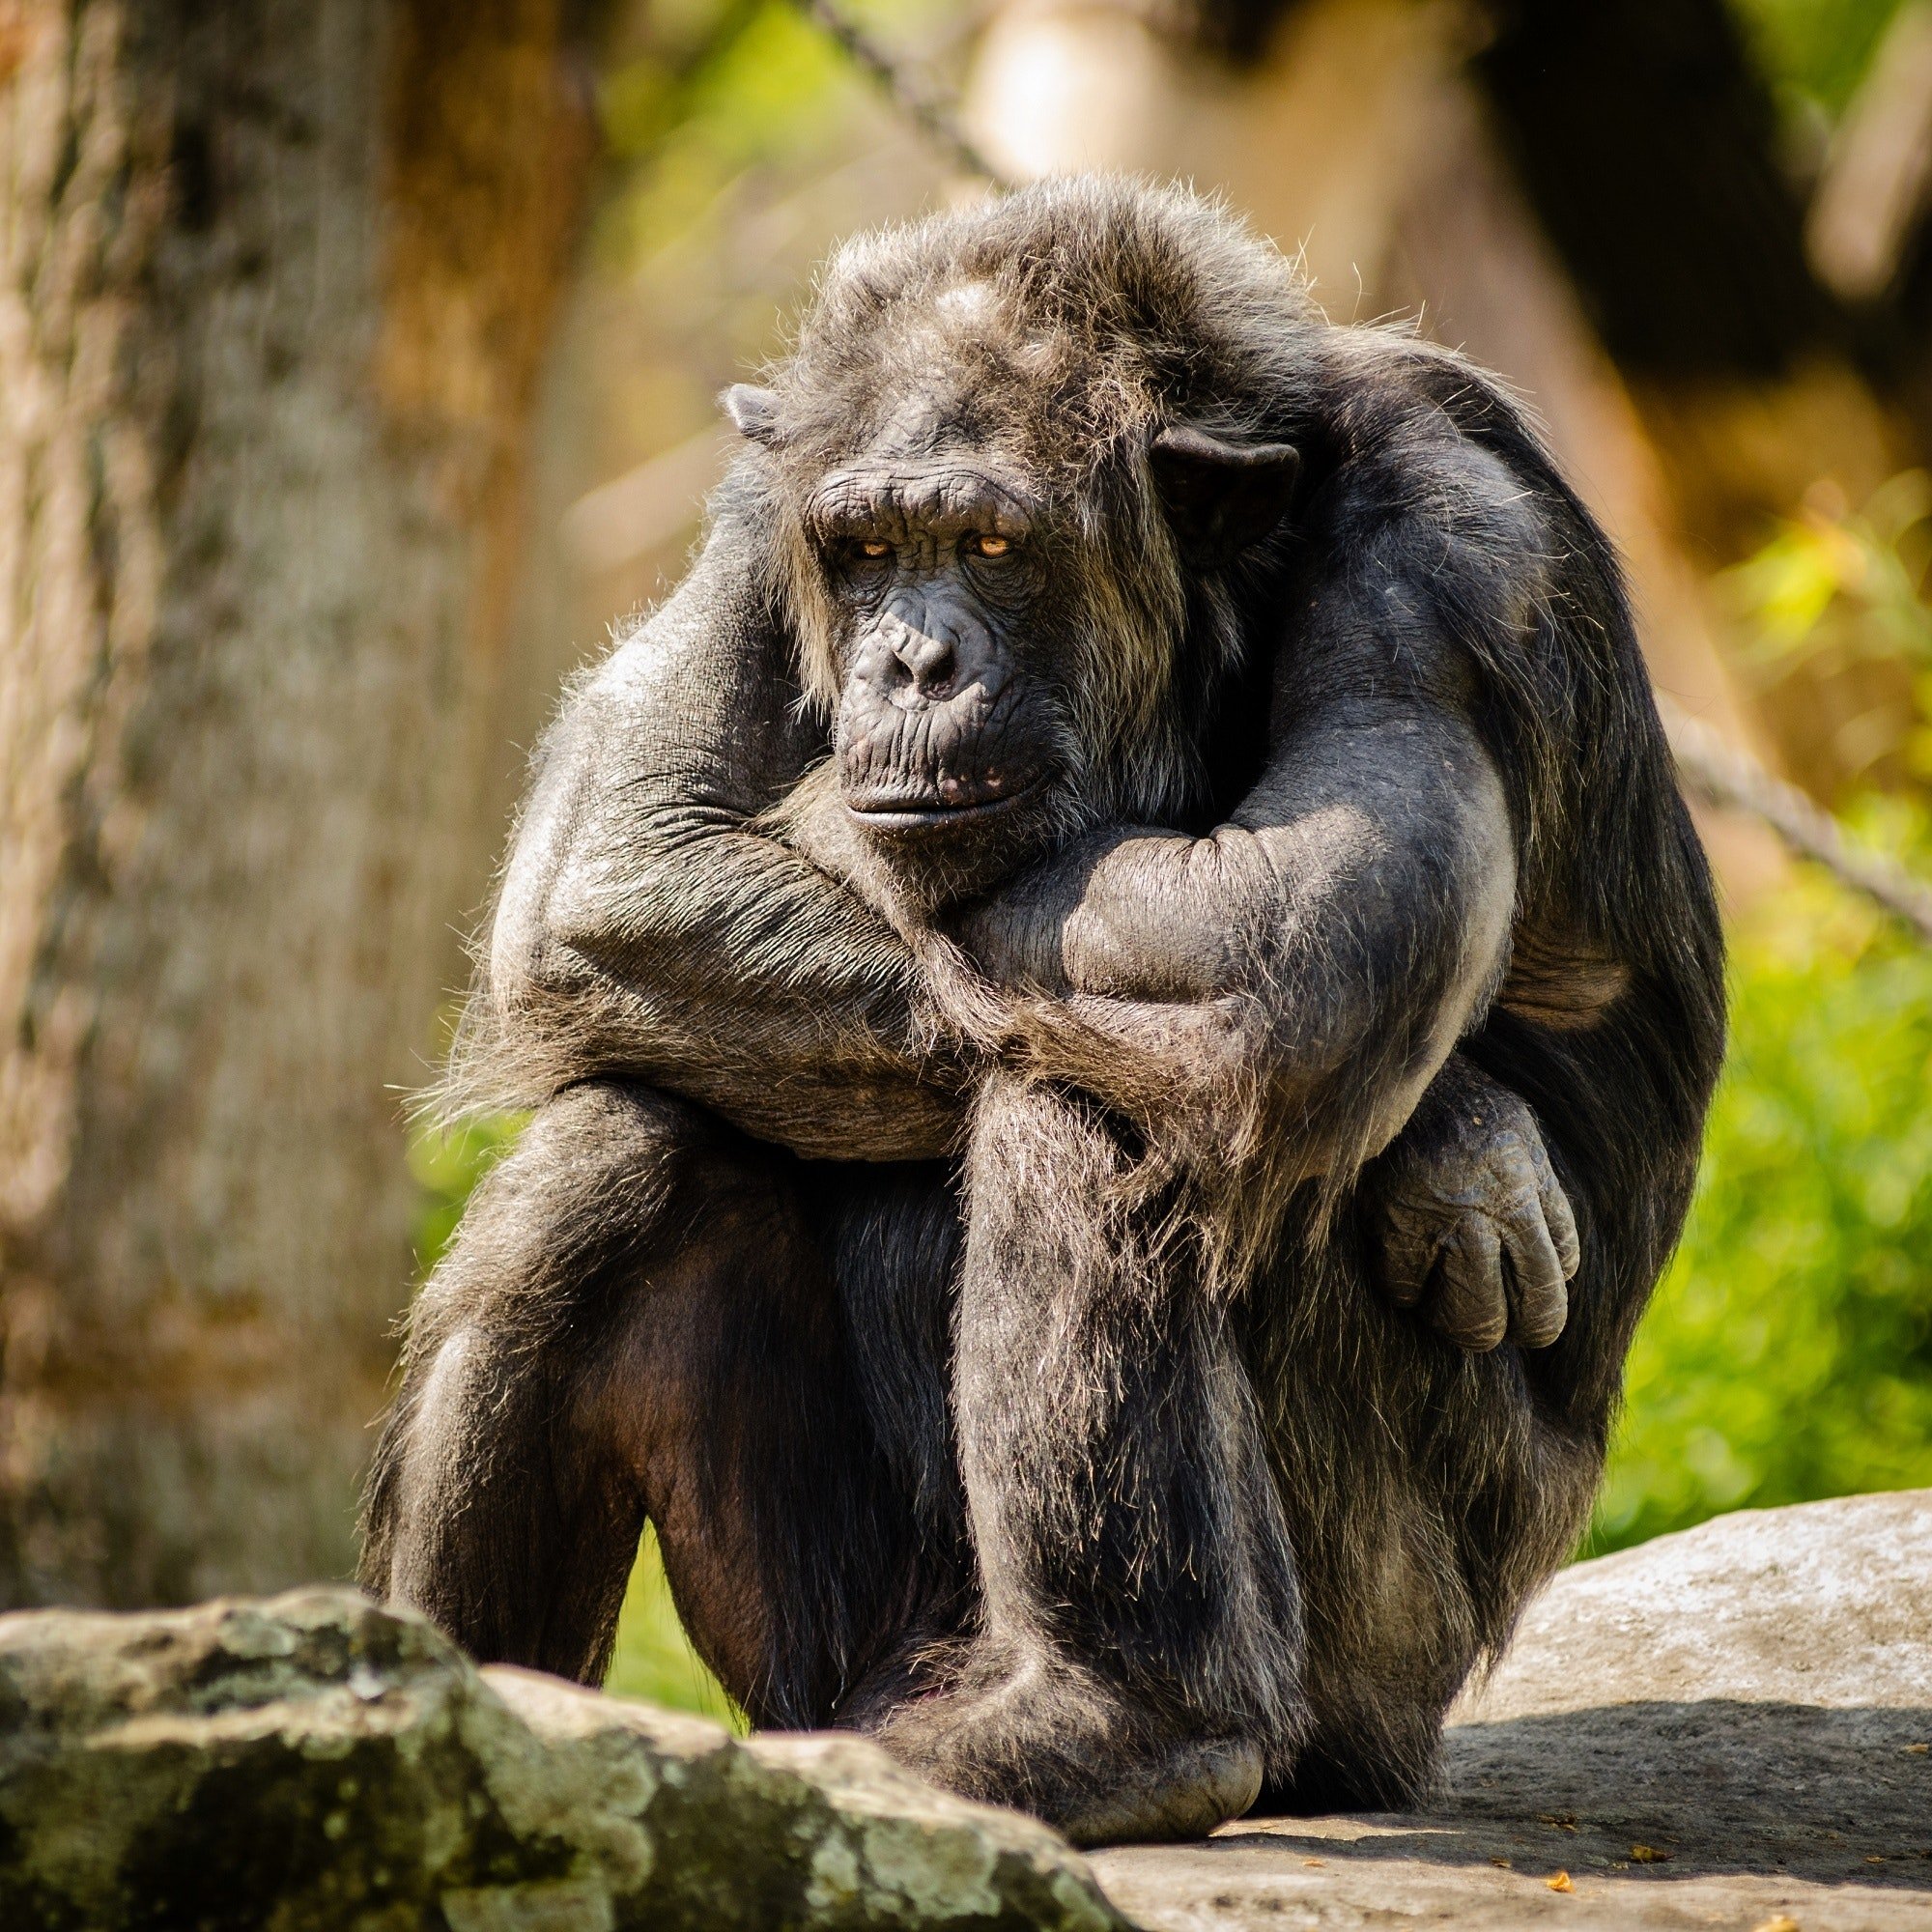 A chimpanzee sitting in its habitat. | Photo: Pexels